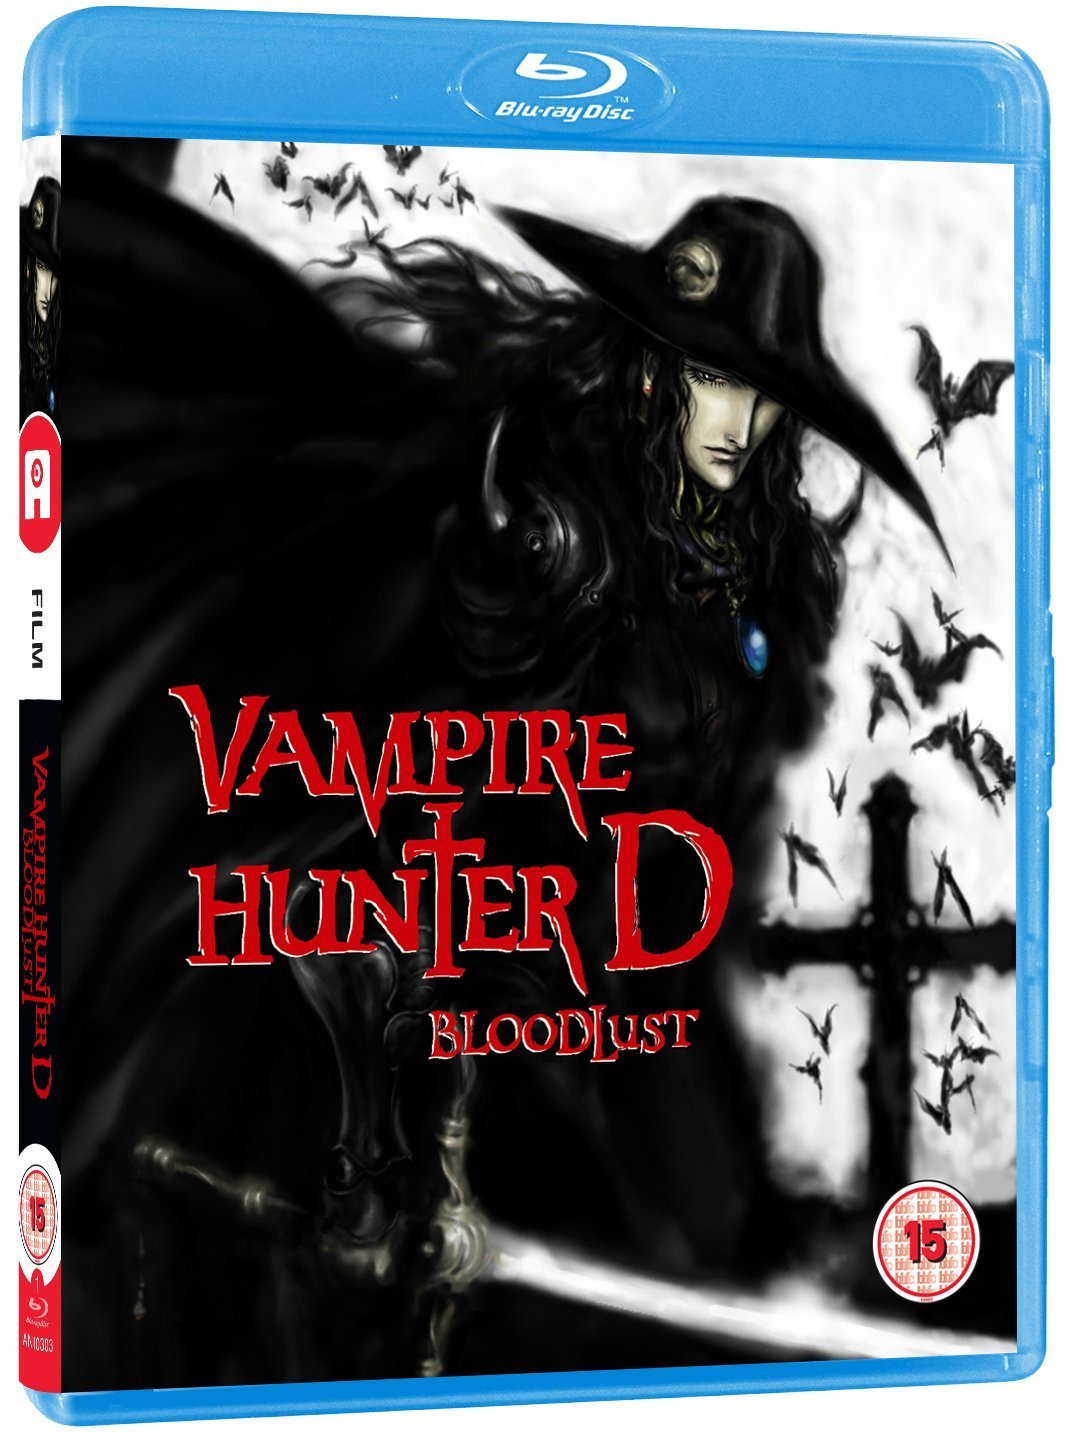 Vampire Hunter D: Bloodlust' Is The Best Gothic Horror Story